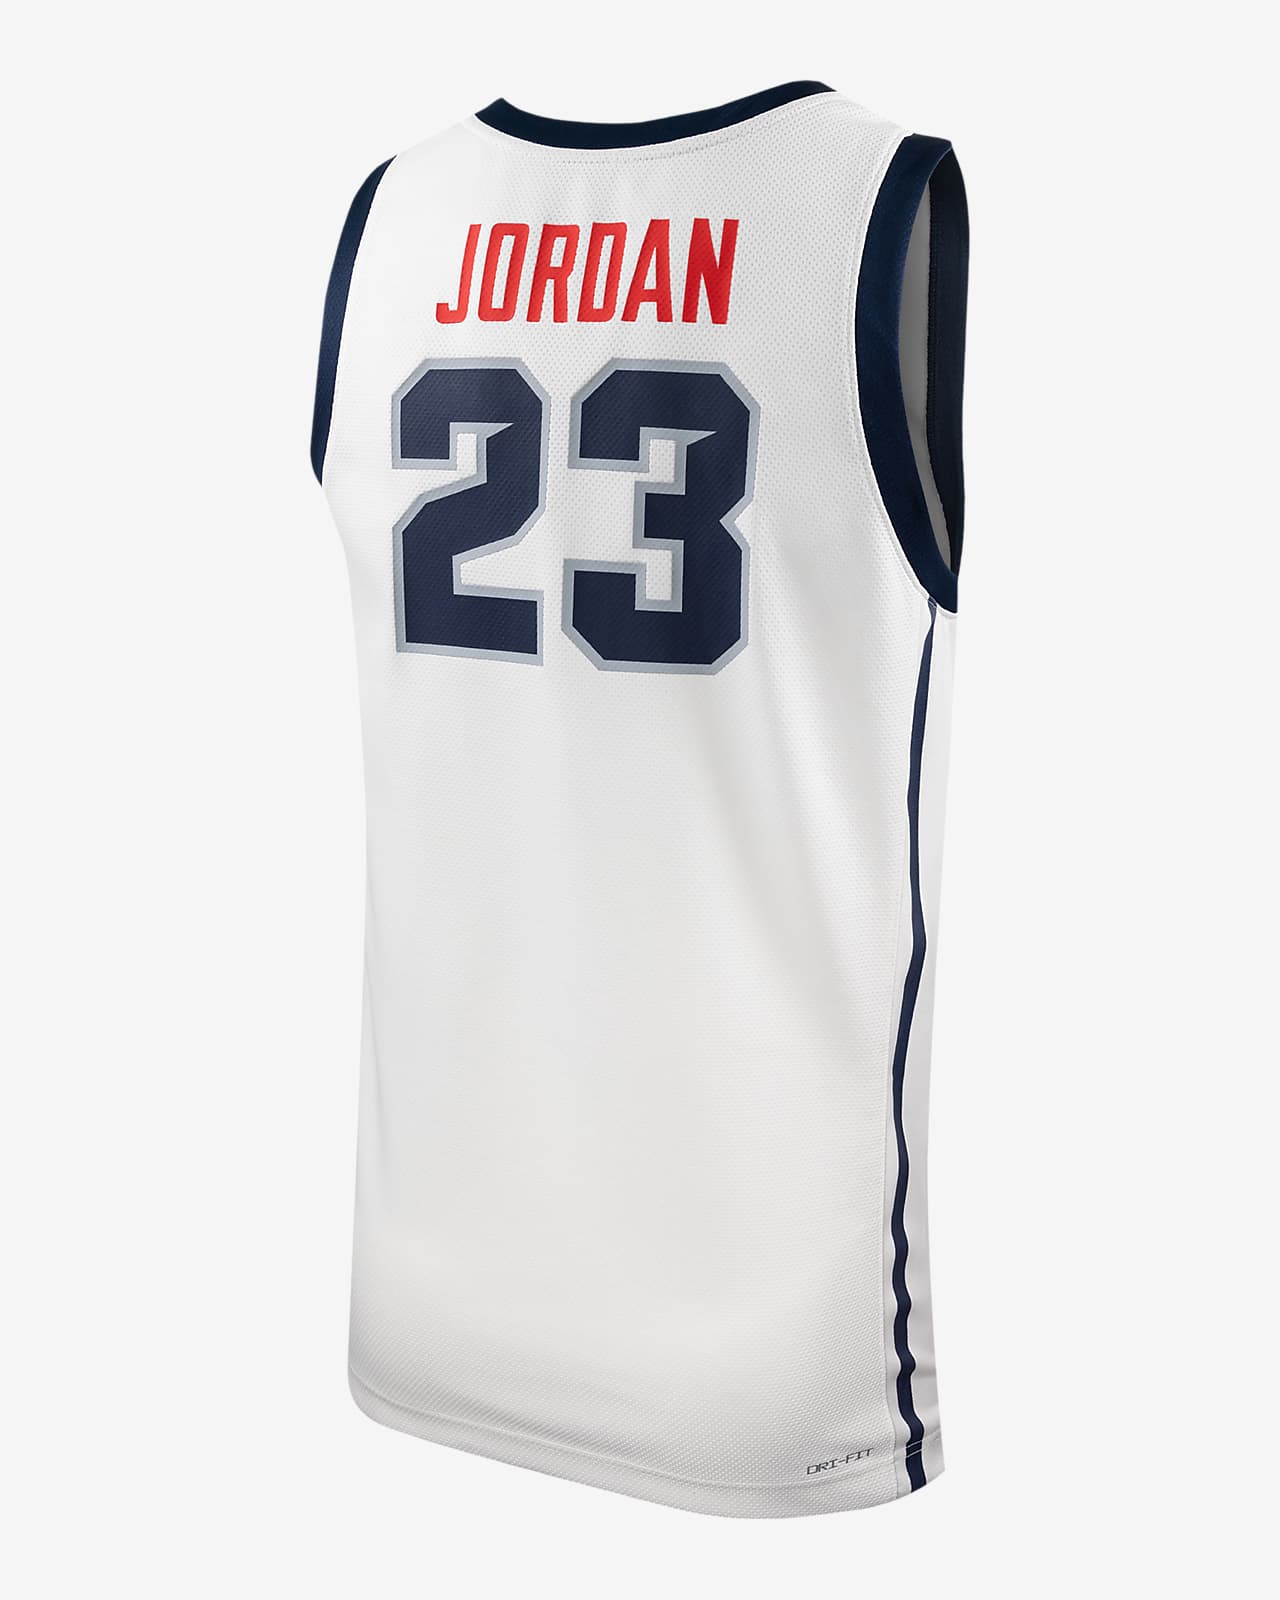 Nike Jordan Basketball Jersey XS White